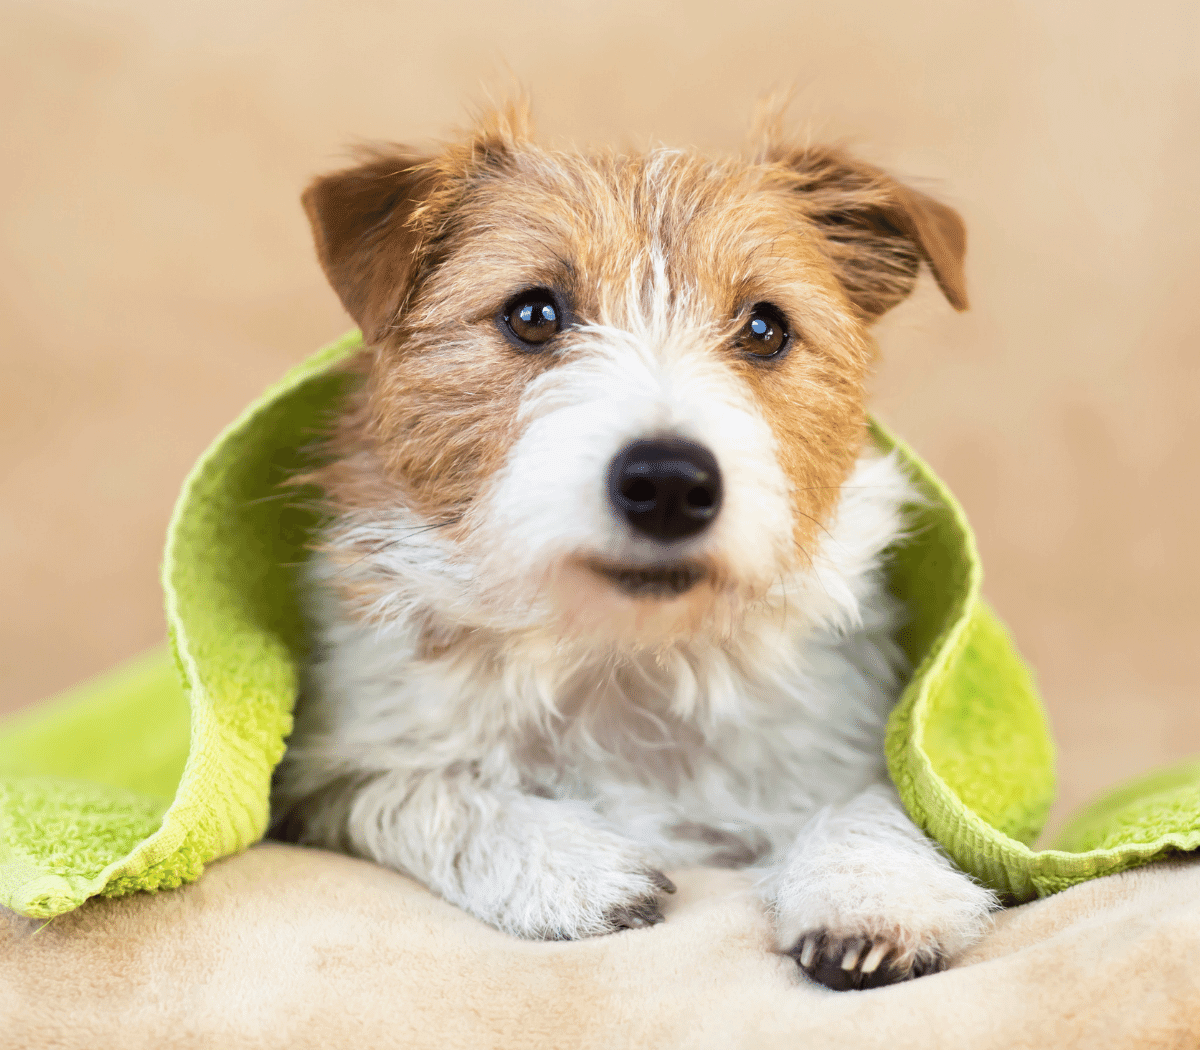 Dog sitting on towel